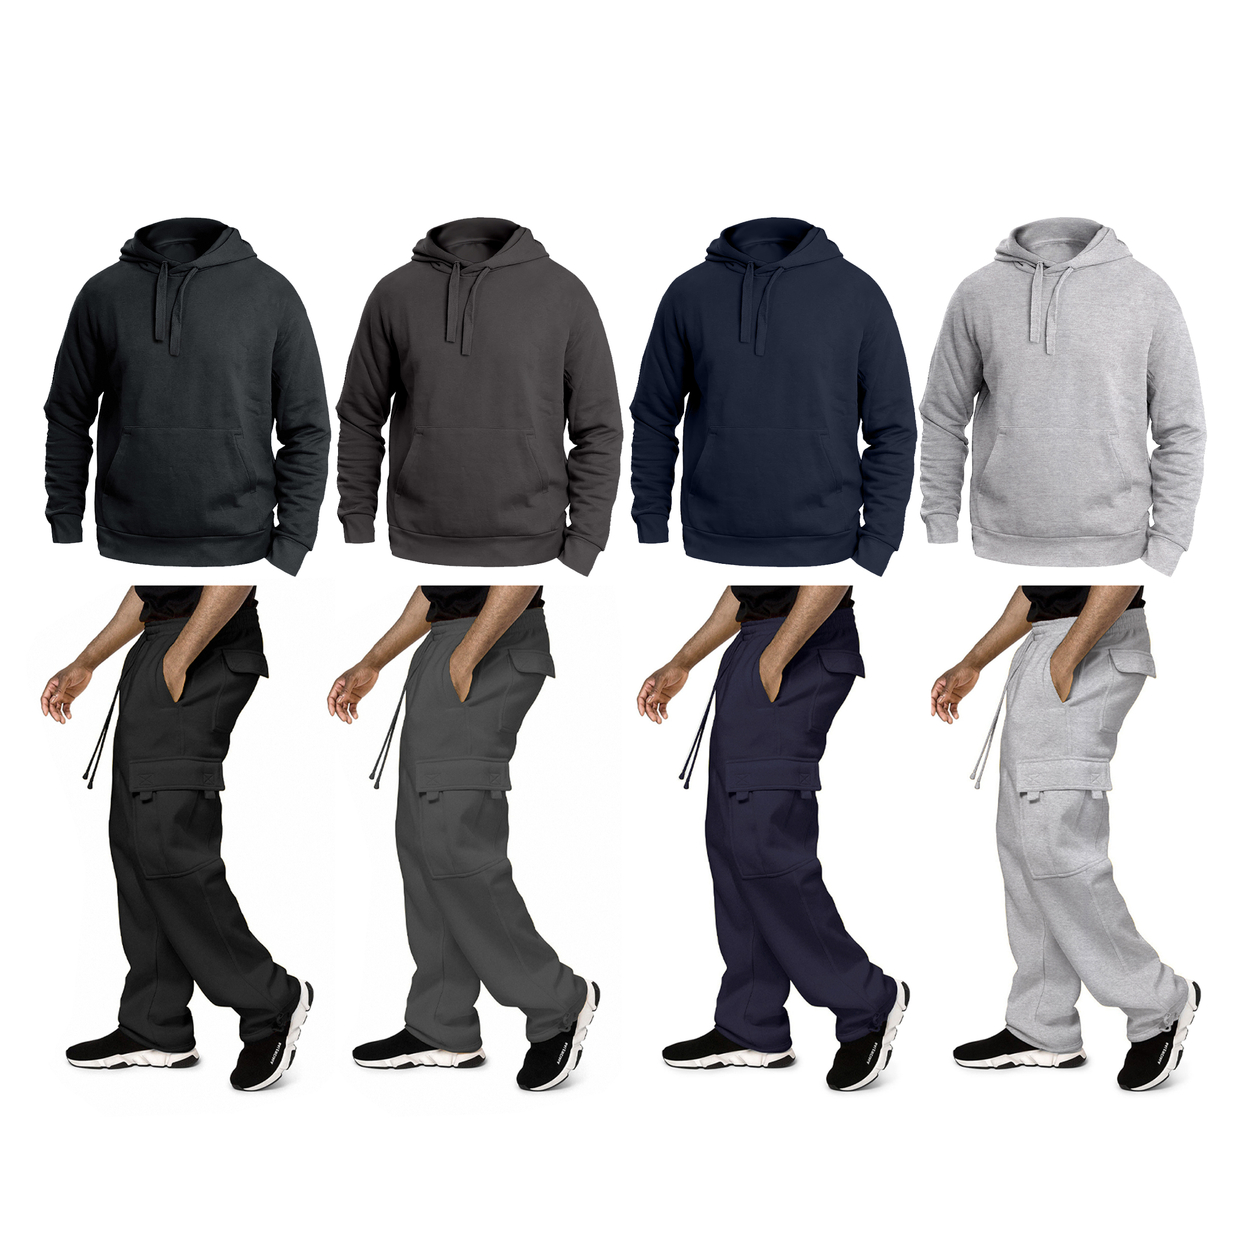 Men's Big & Tall Winter Warm Cozy Athletic Fleece Lined Multi-Pocket Cargo Sweatsuit - Navy, X-large